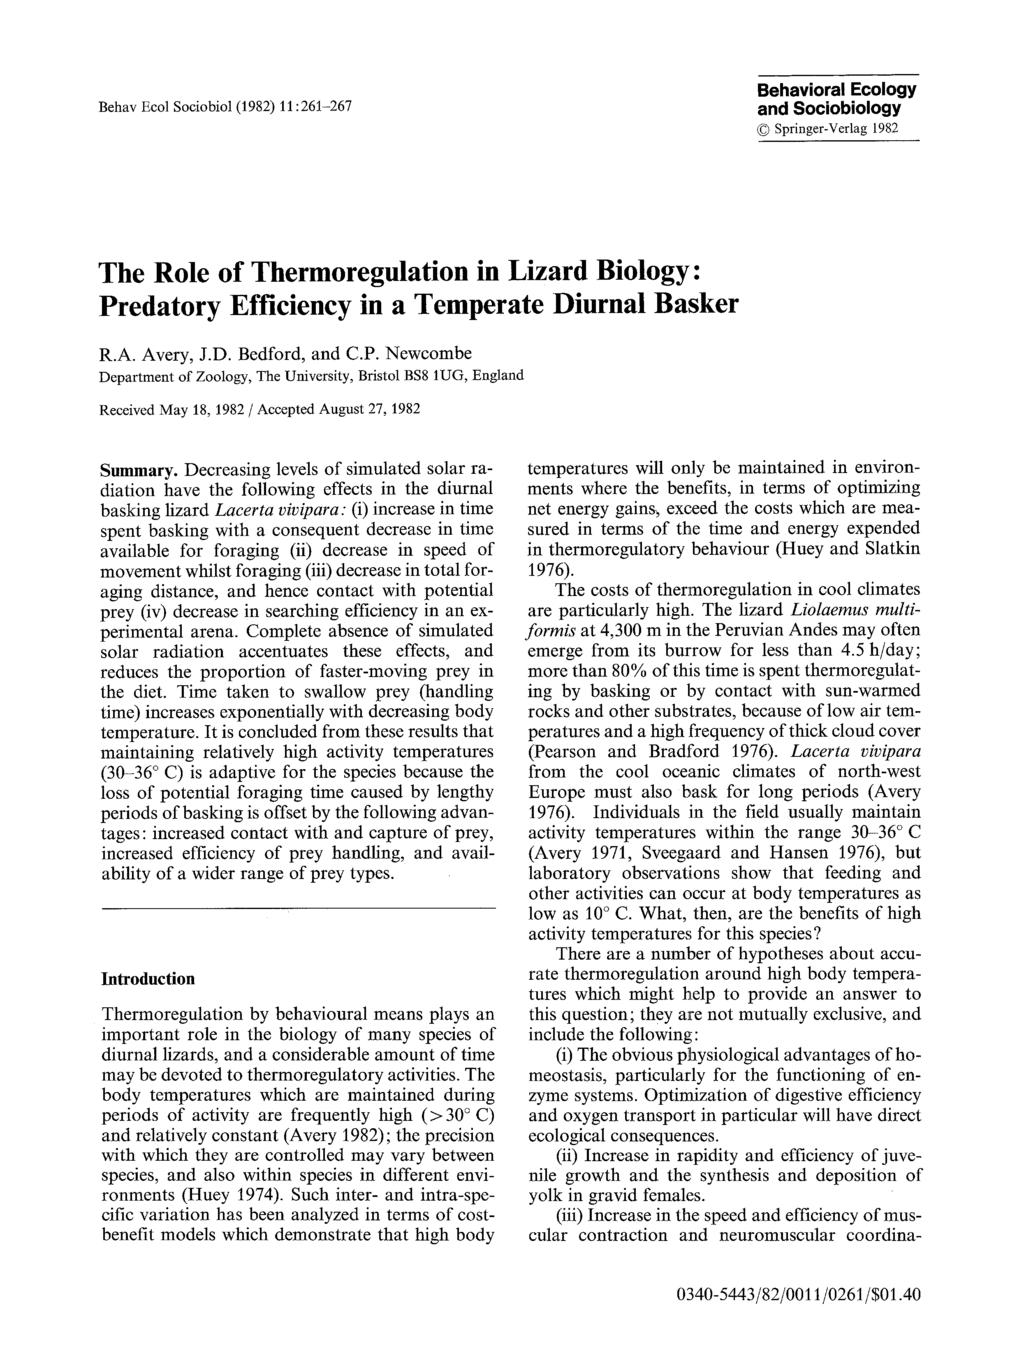 Behav Ecol Sociobiol (1982) 11:261-267 Behavioral Ecology and Sociobiology 9 Springer-Verlag 1982 The Role of Thermoregulation in Lizard Biology: Predatory Efficiency in a Temperate Diurnal Basker R.